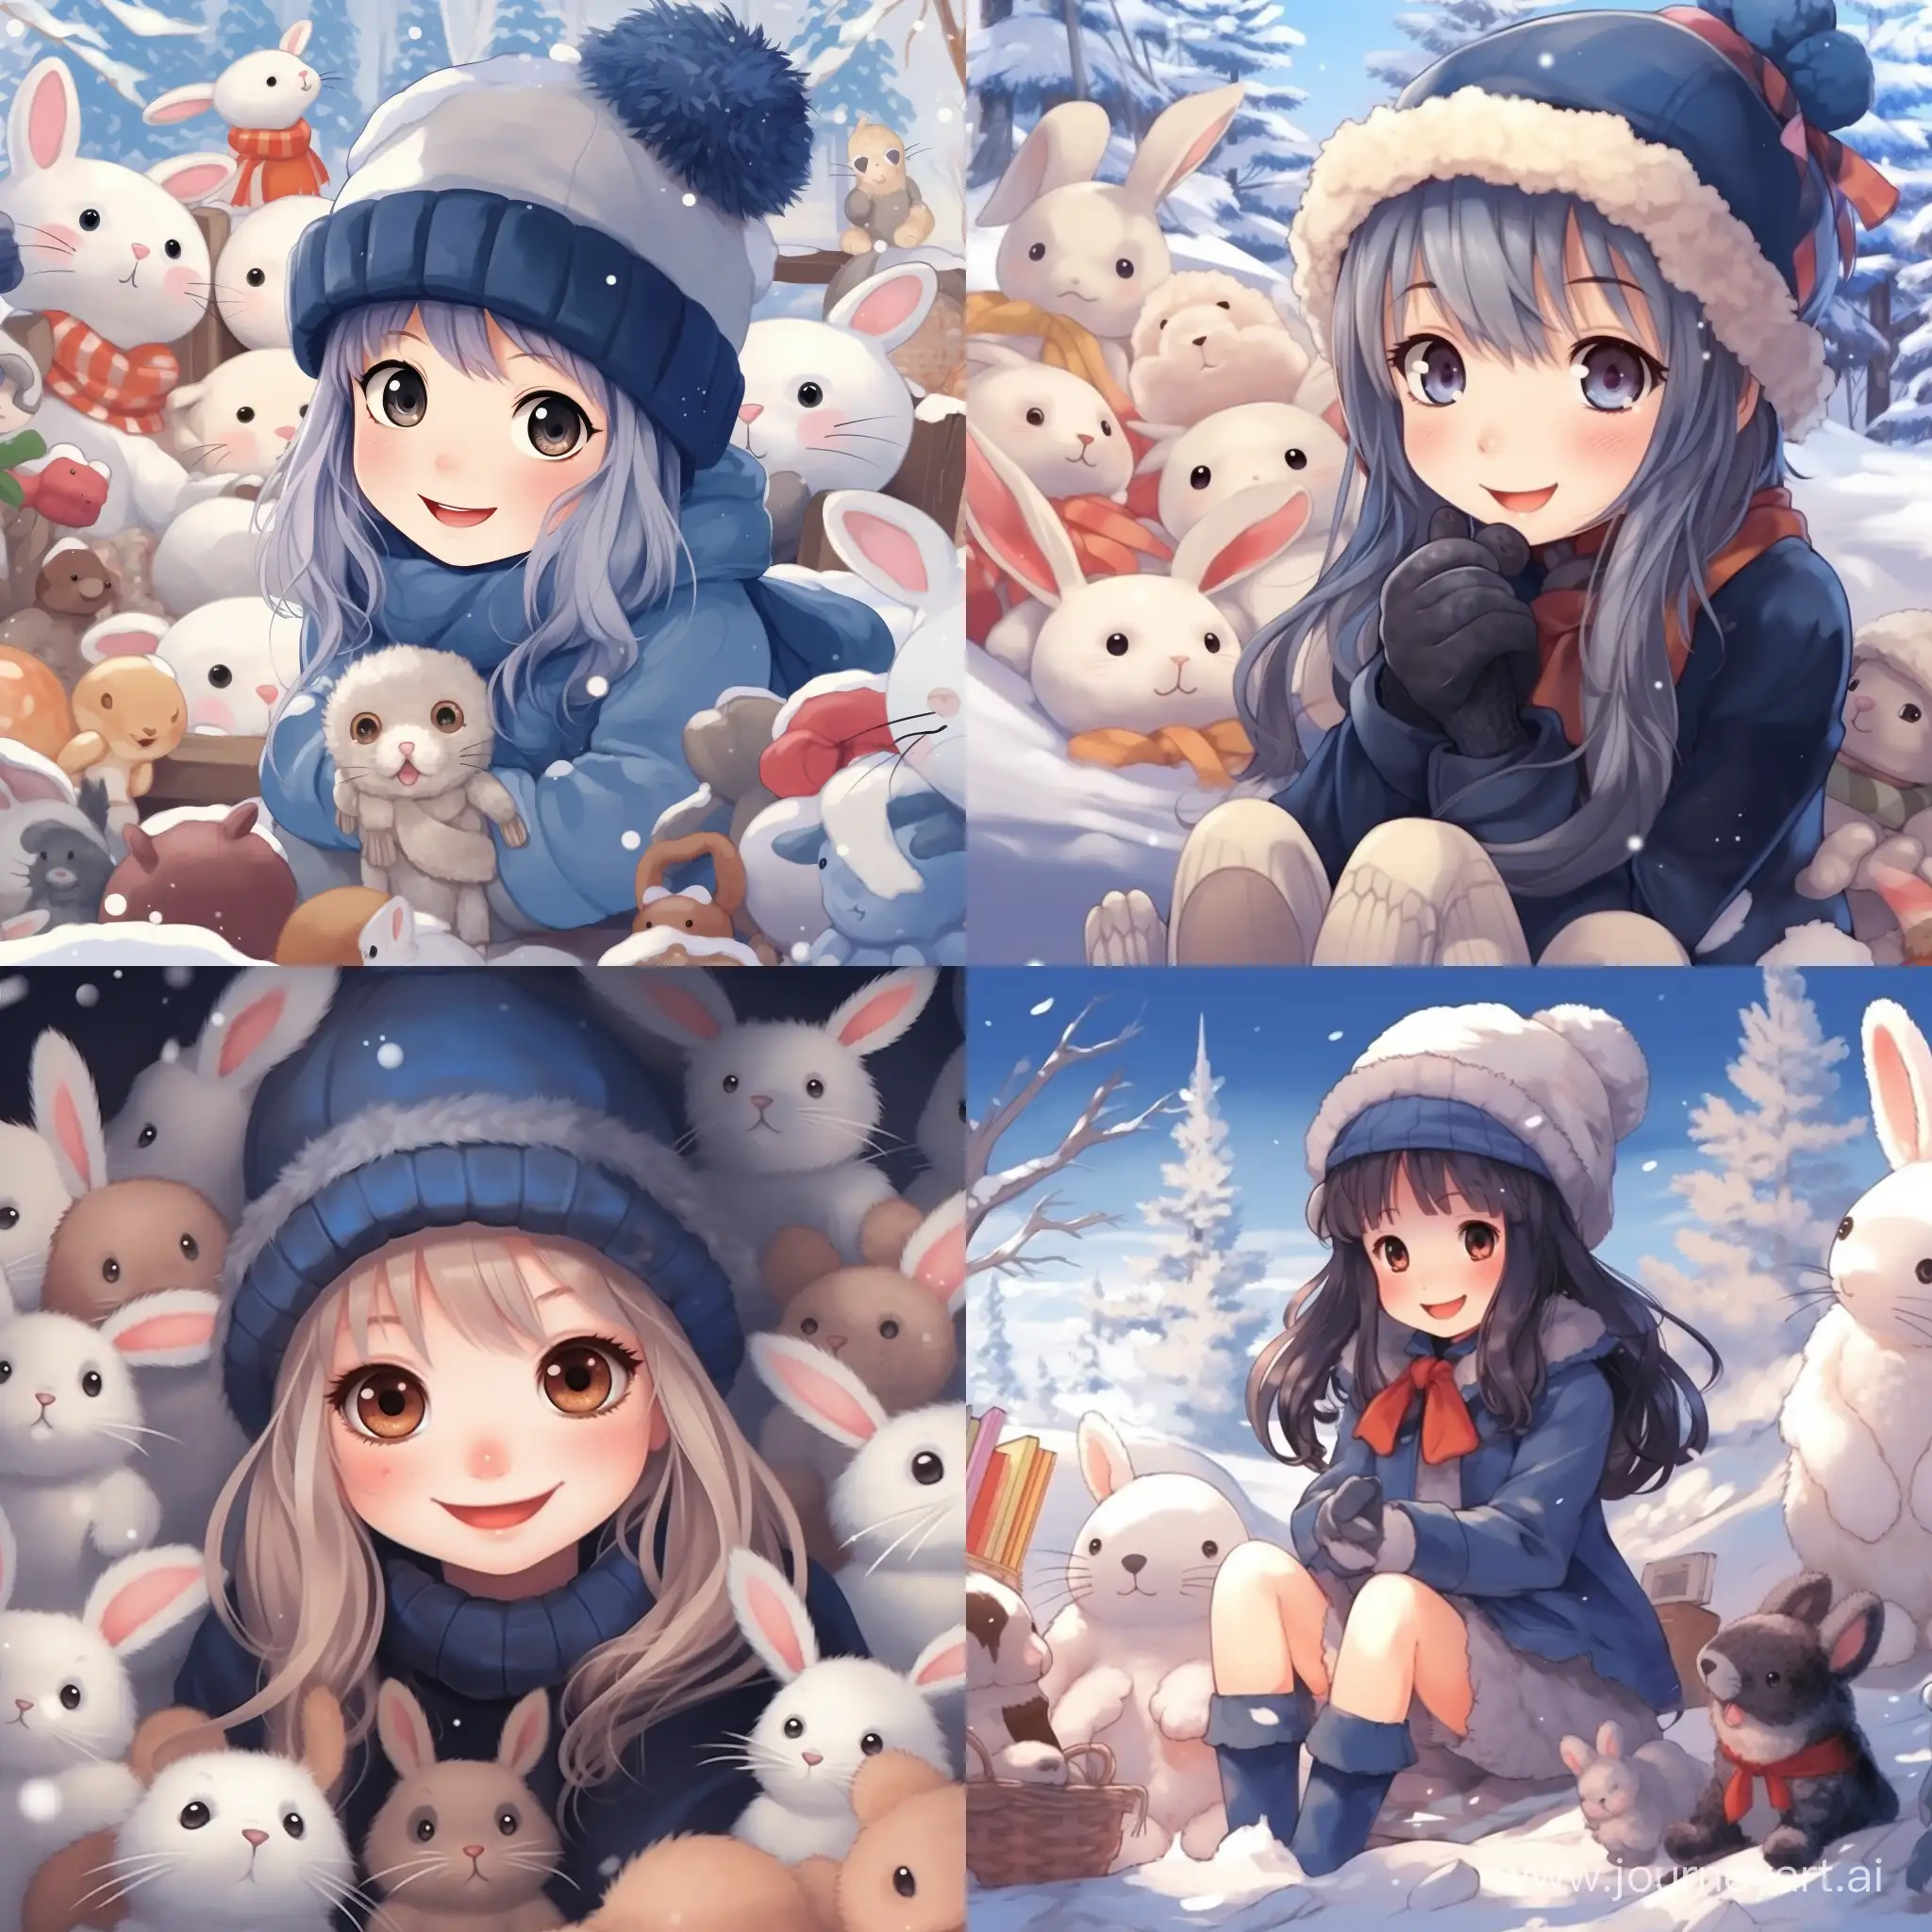 Adorable-Little-Girl-in-Winter-Wonderland-with-Yukine-Rabbit